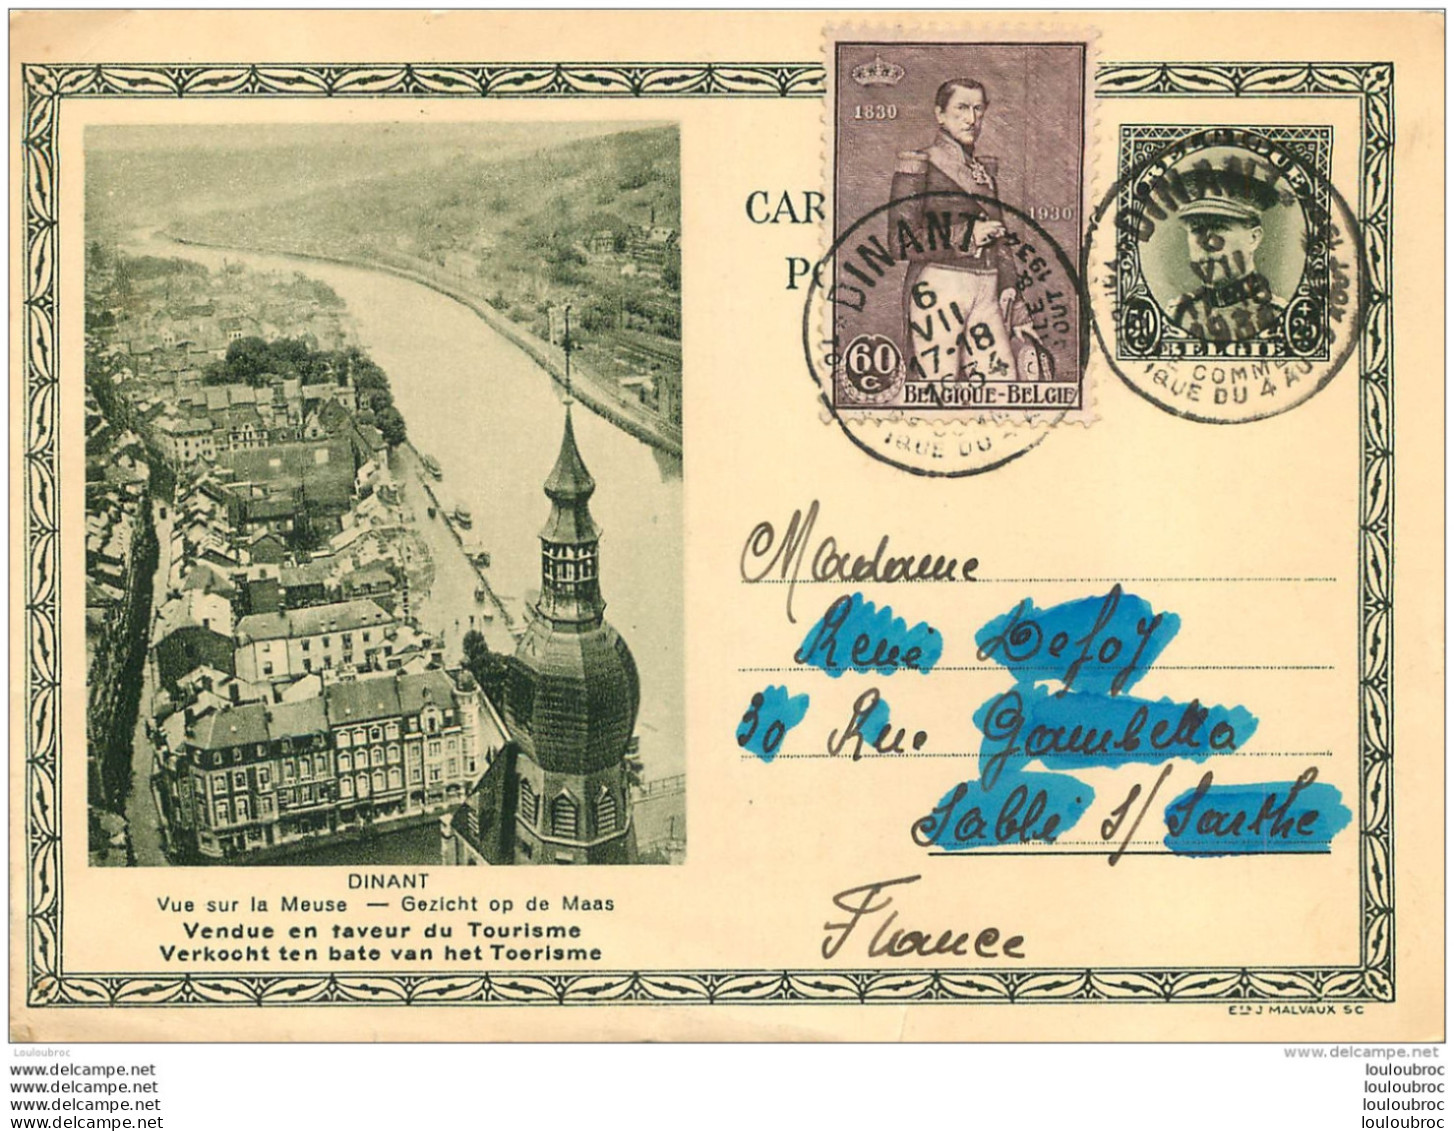 DINANT VUE SUR LA MEUSE OBLITEREE A DINANT EN 1934 - Geïllustreerde Briefkaarten (1971-2014) [BK]